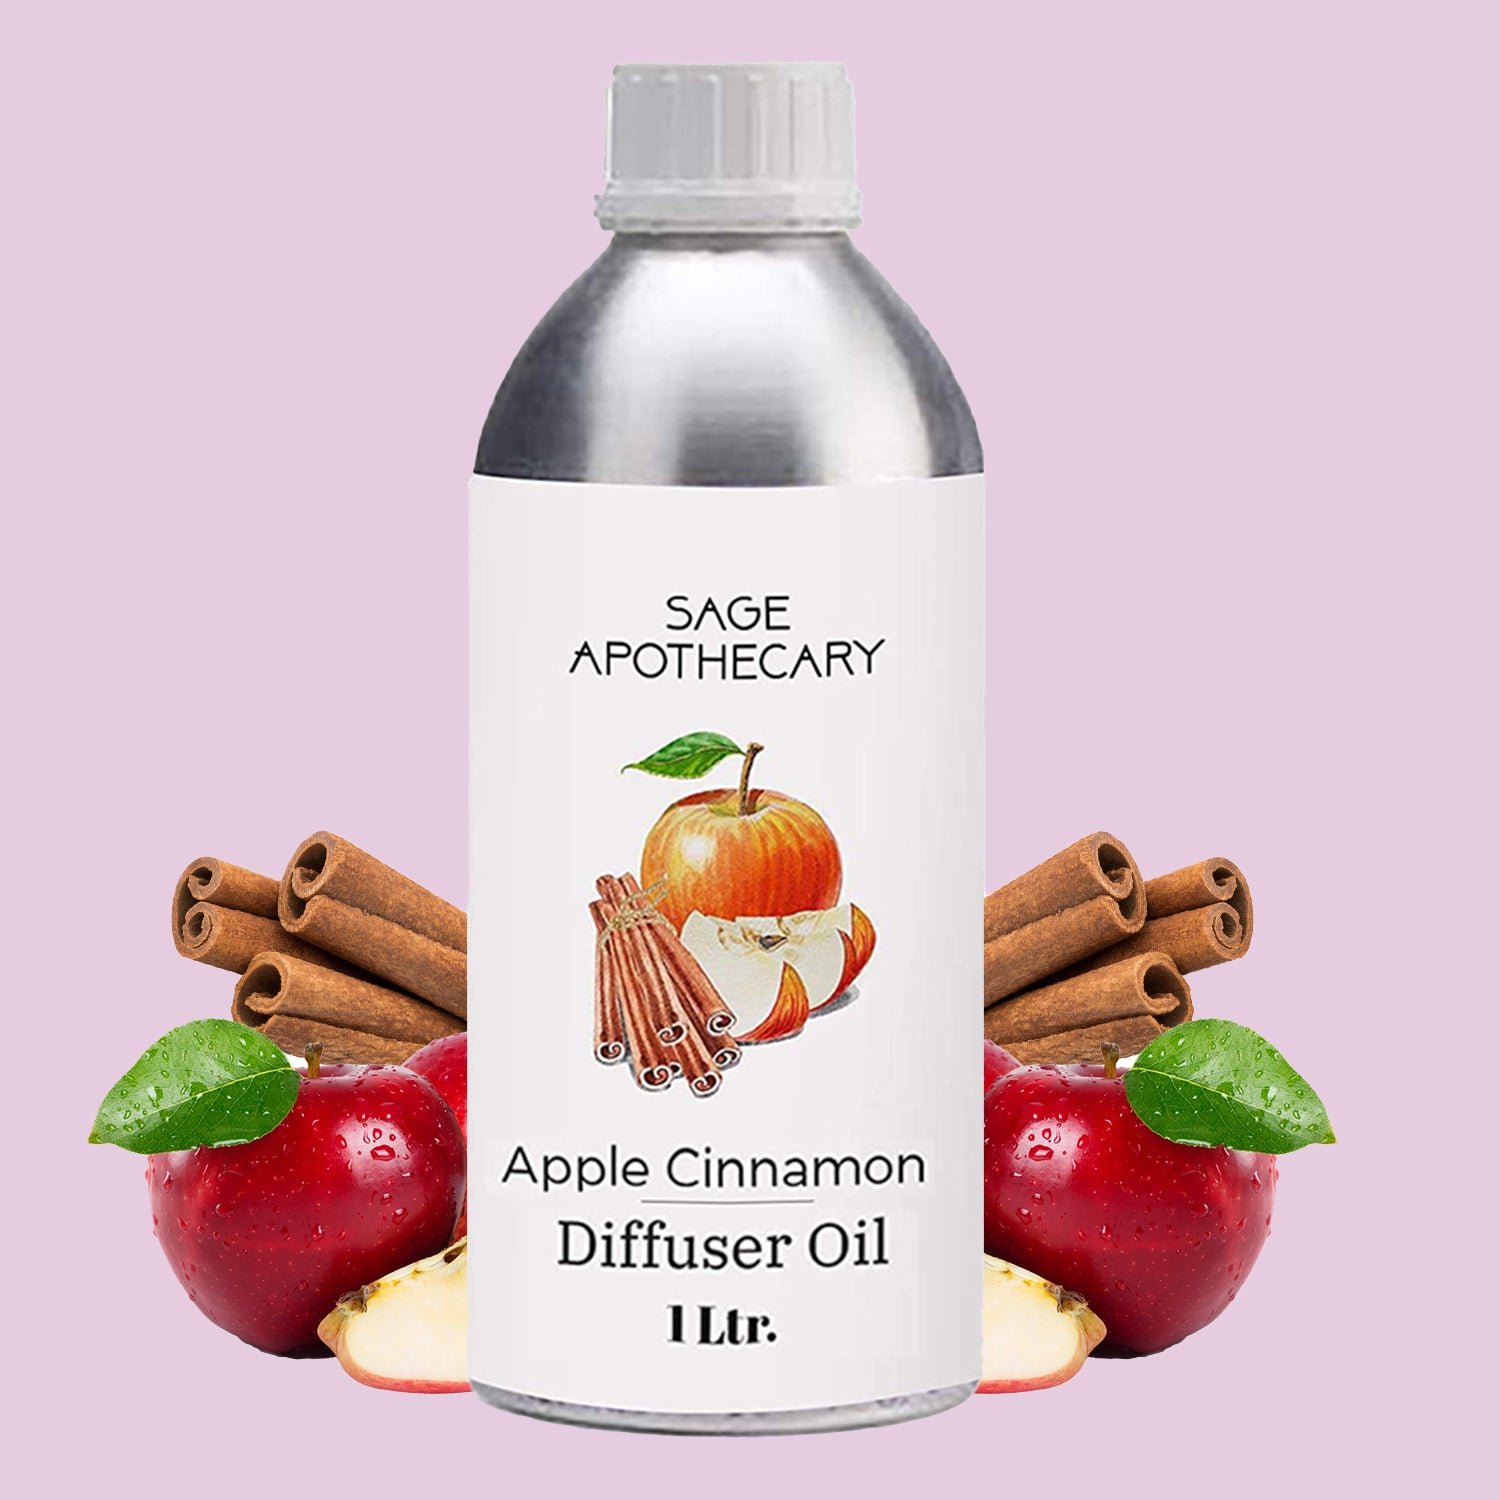 Apple Cinnamon Fragrance Oil - A Warm and Cozy Fall Scent, Apple Cinnamon  Scent